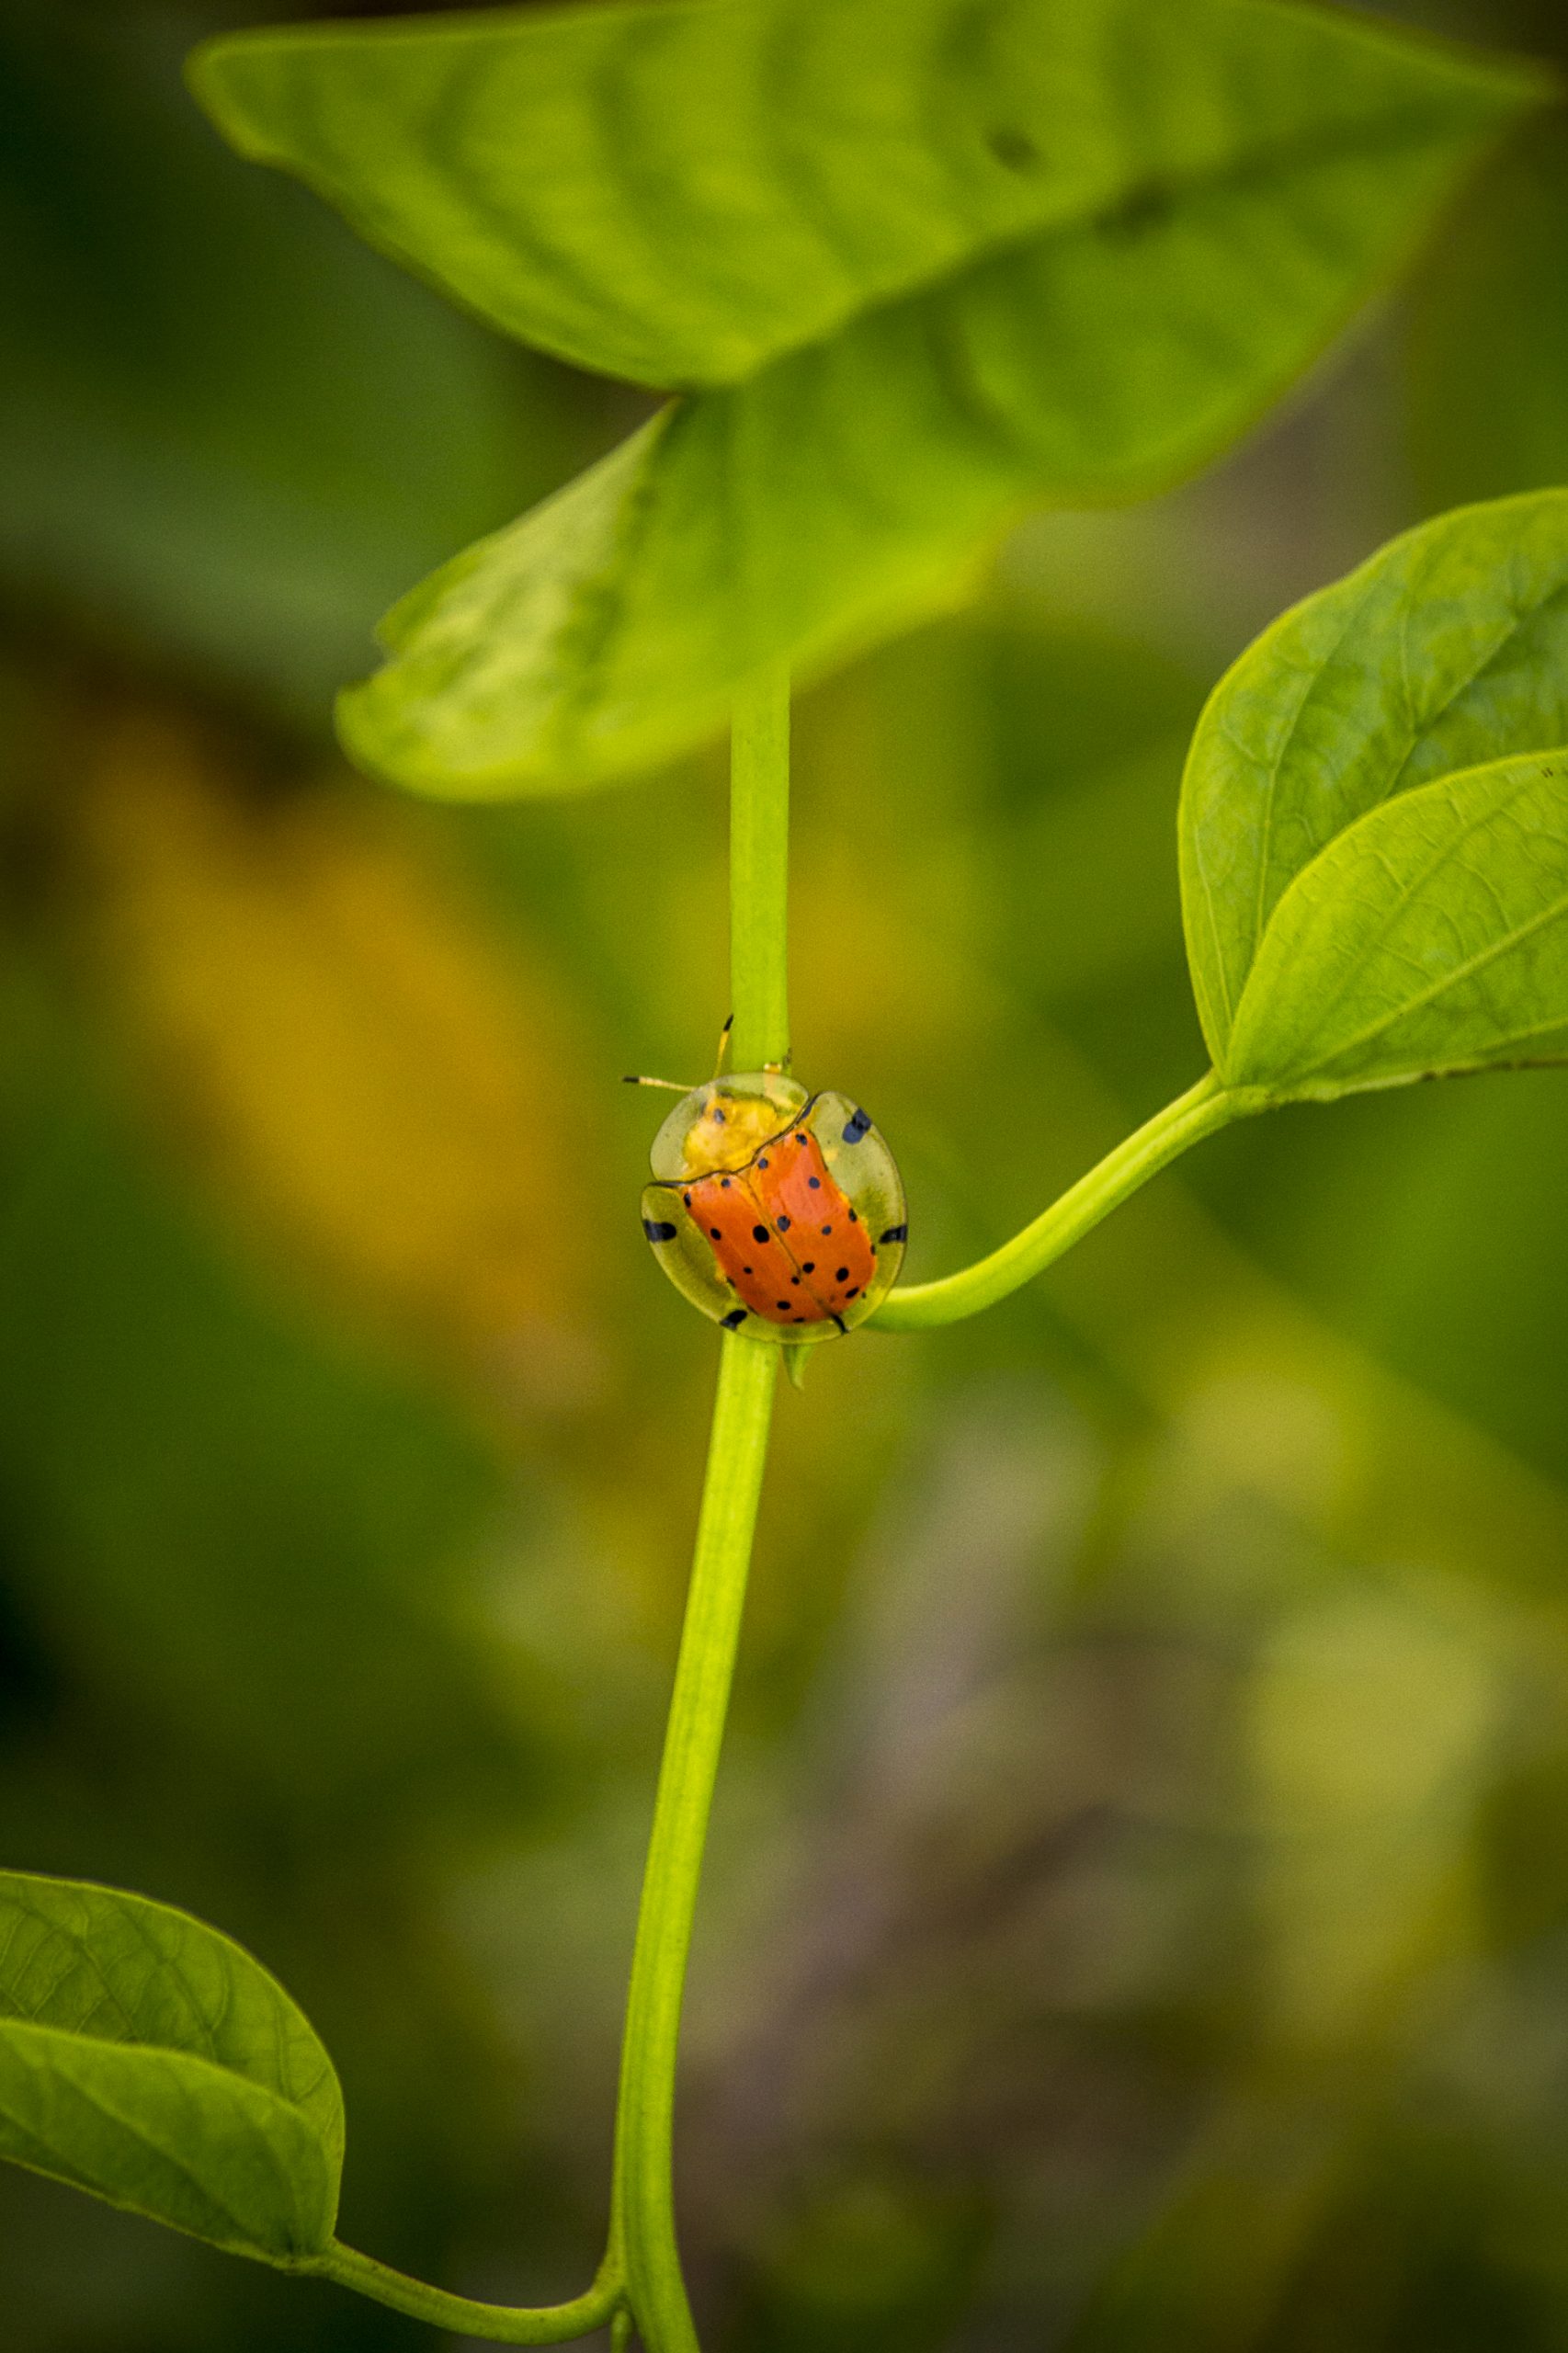 Shield bug on a plant